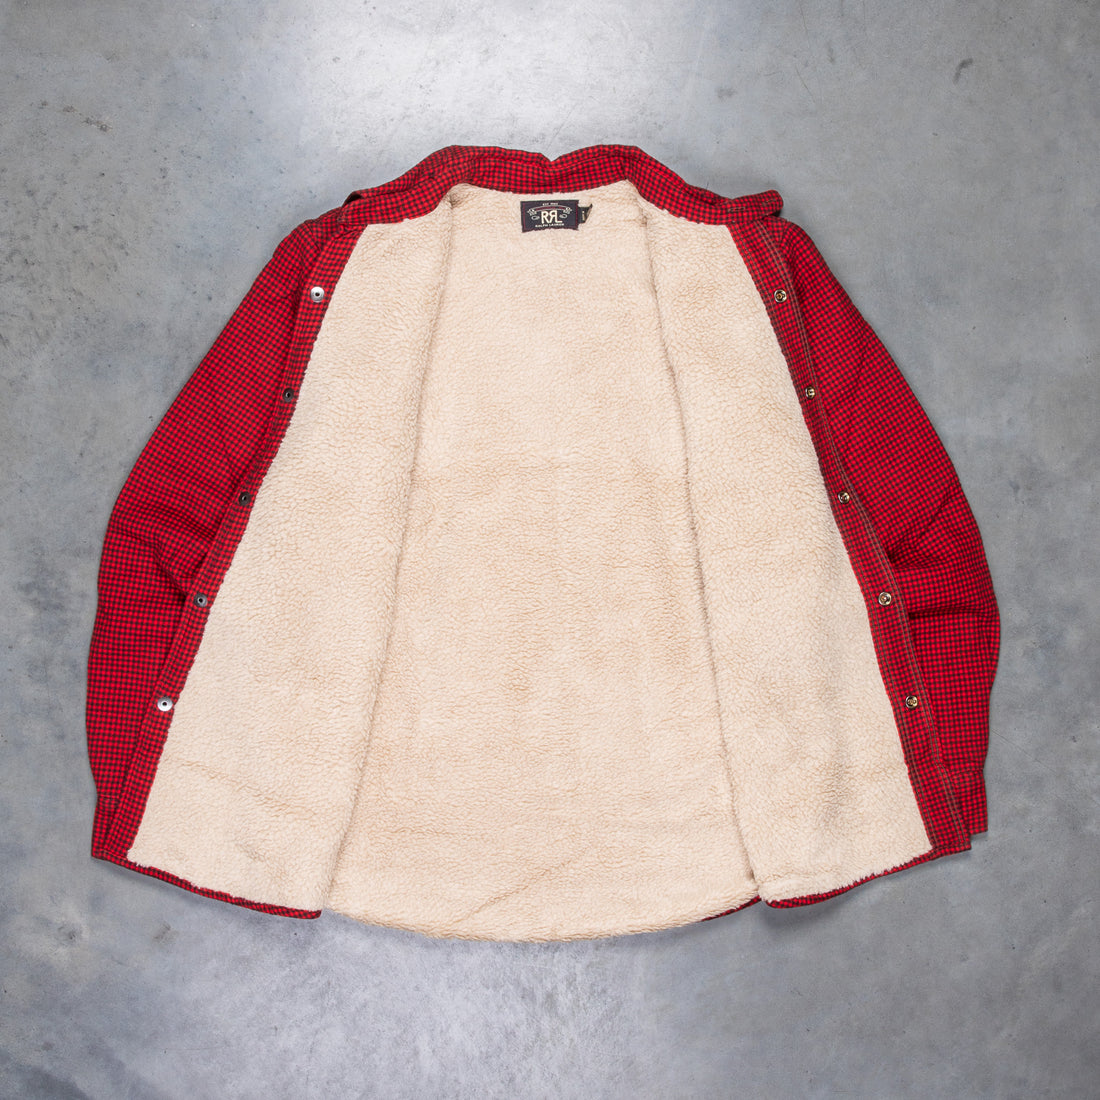 RRL Vermont Fleece Lined Shirt RL-663 Check Red Black